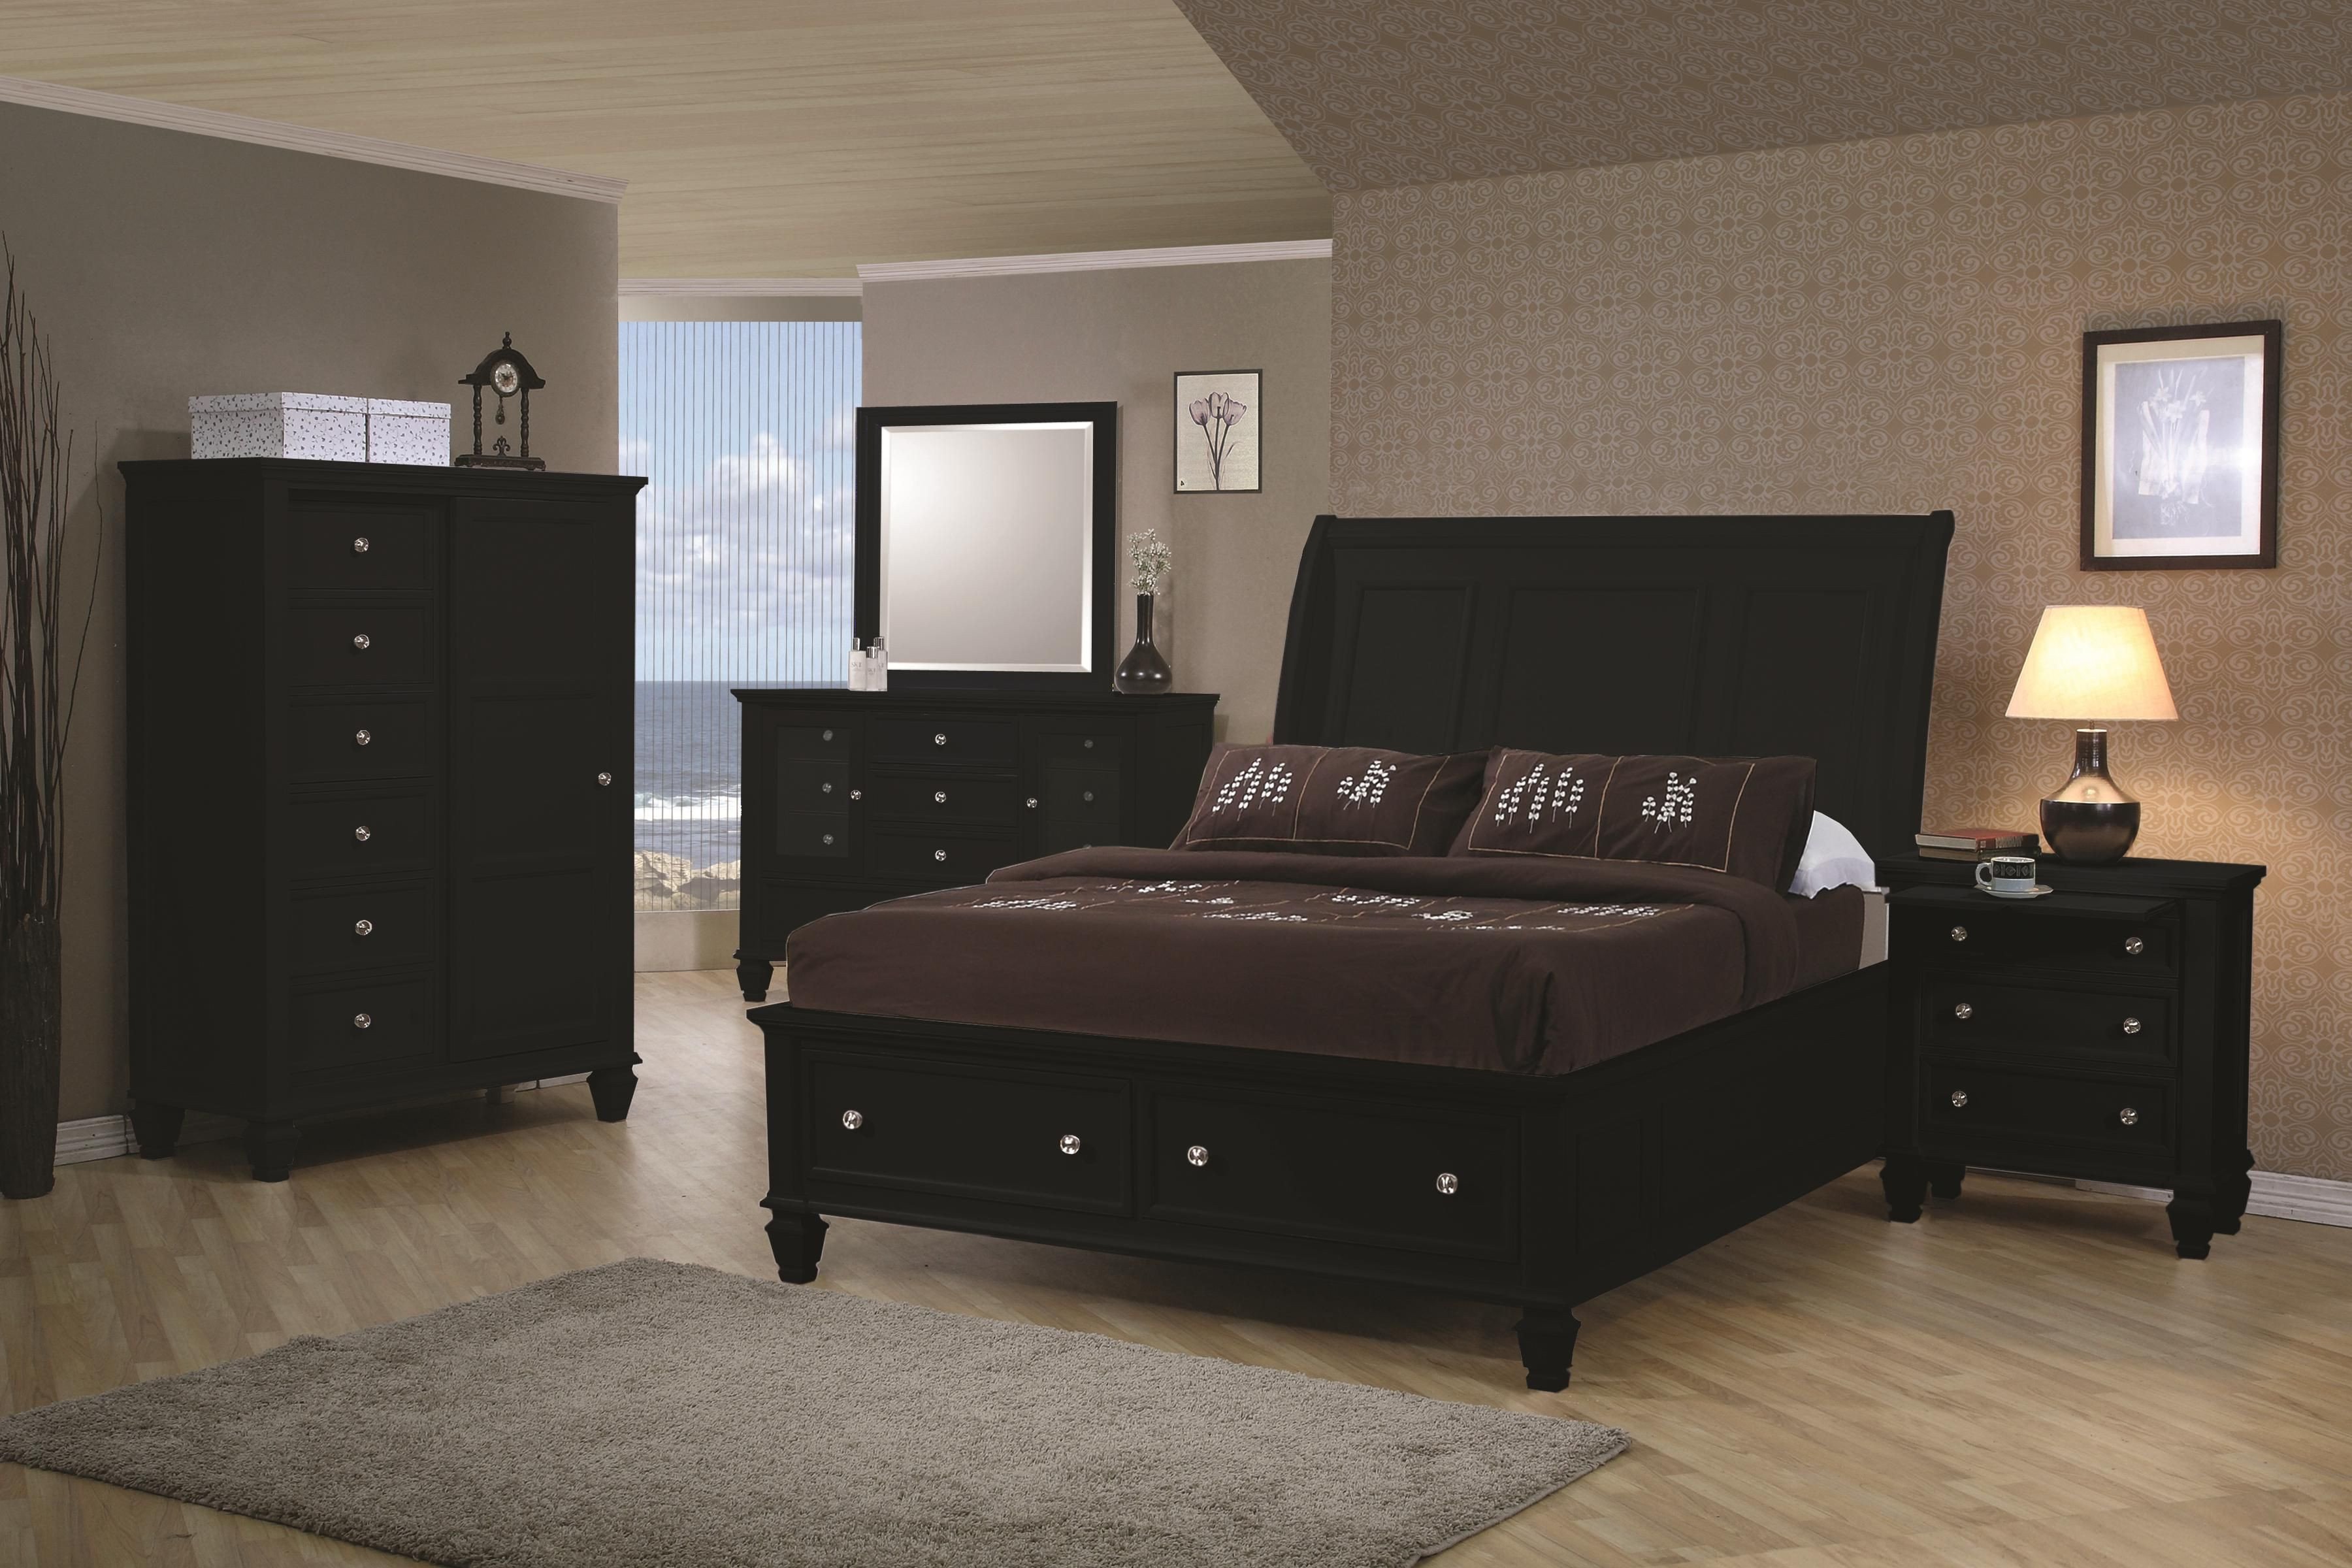 Black And Wood Bedroom